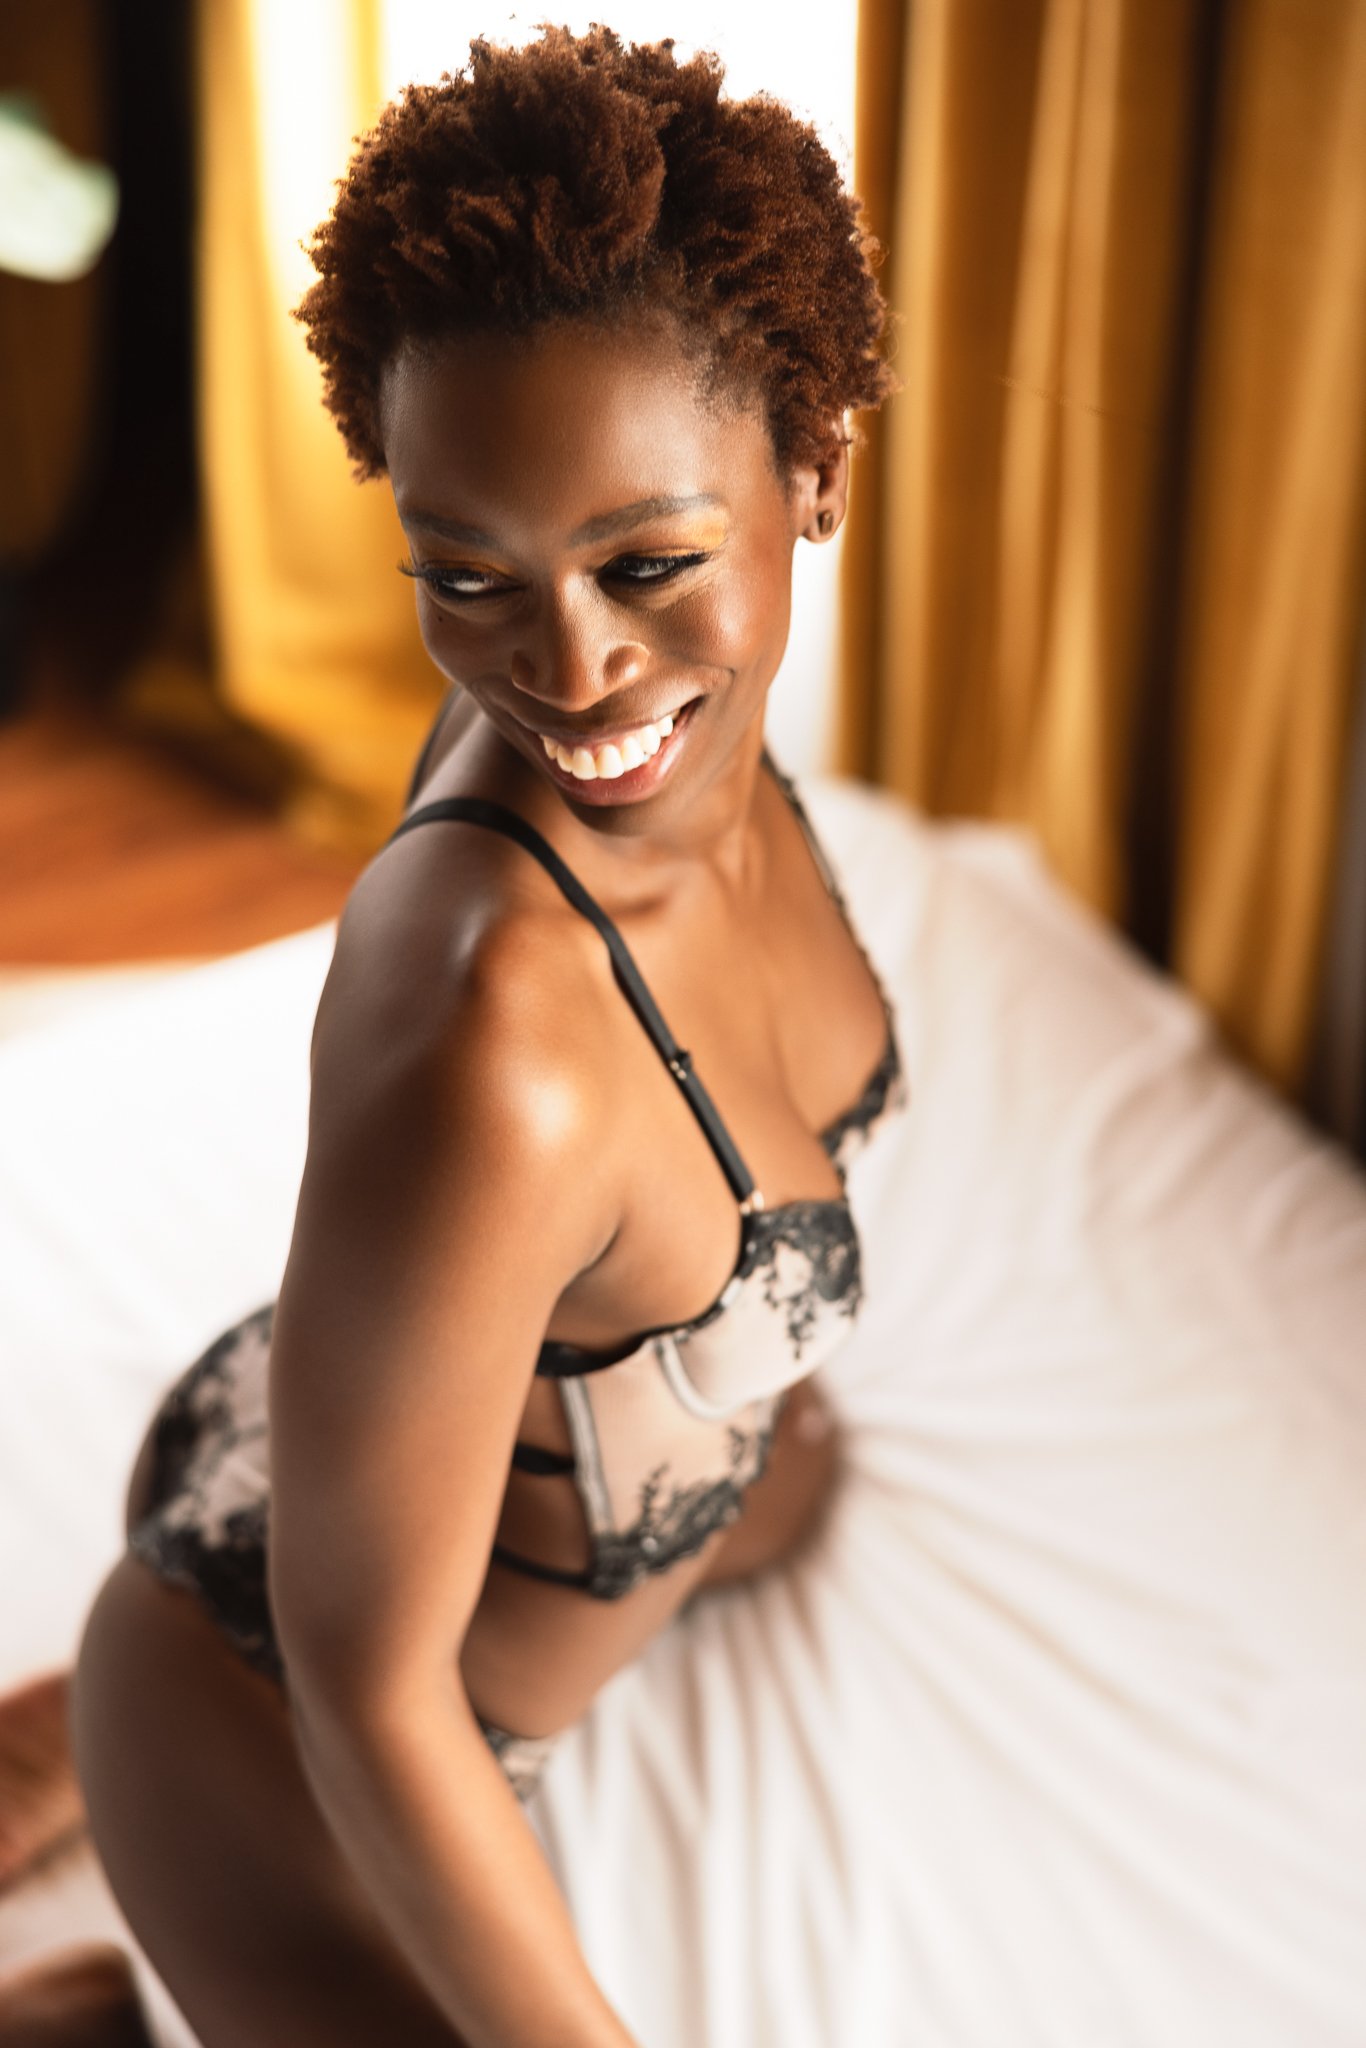 Stunning black woman smiling - Philly boudoir photo